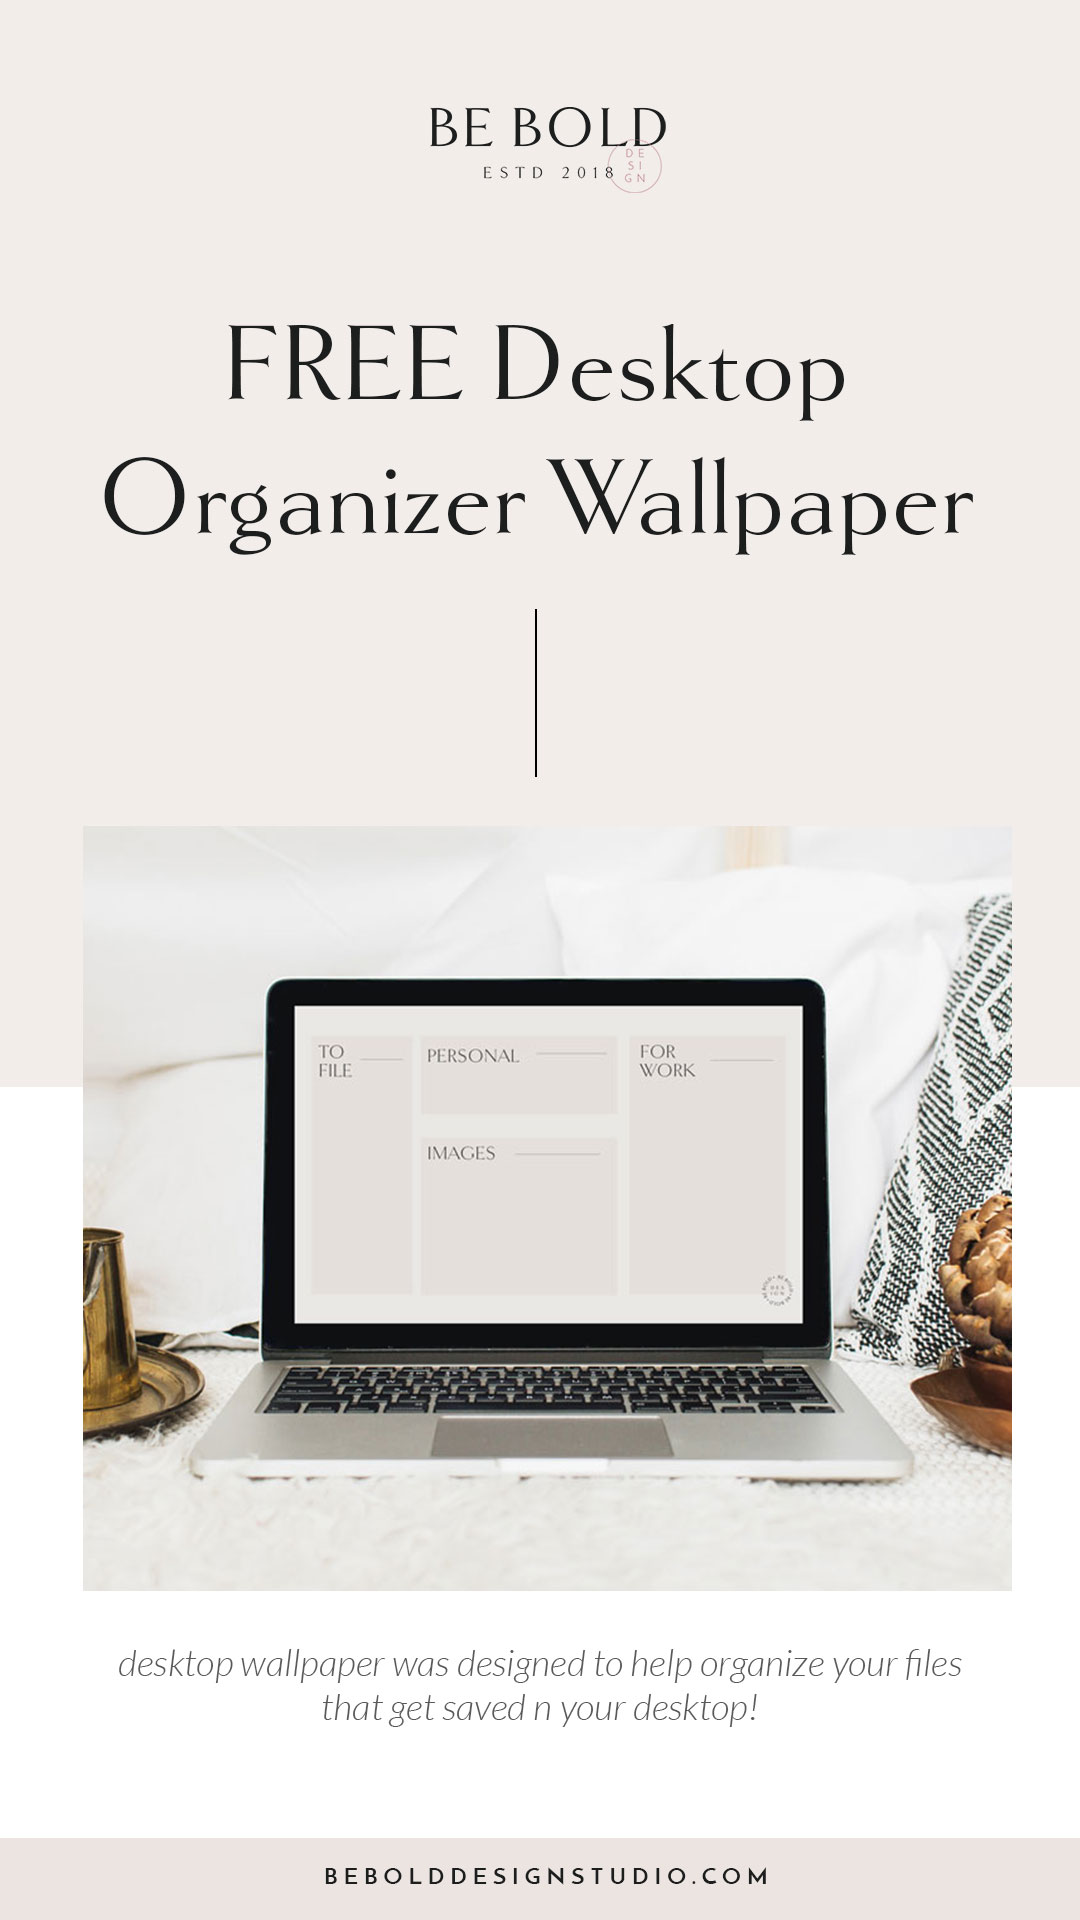 Desktop Wallpaper Free For Organization Be Bold Design Studio